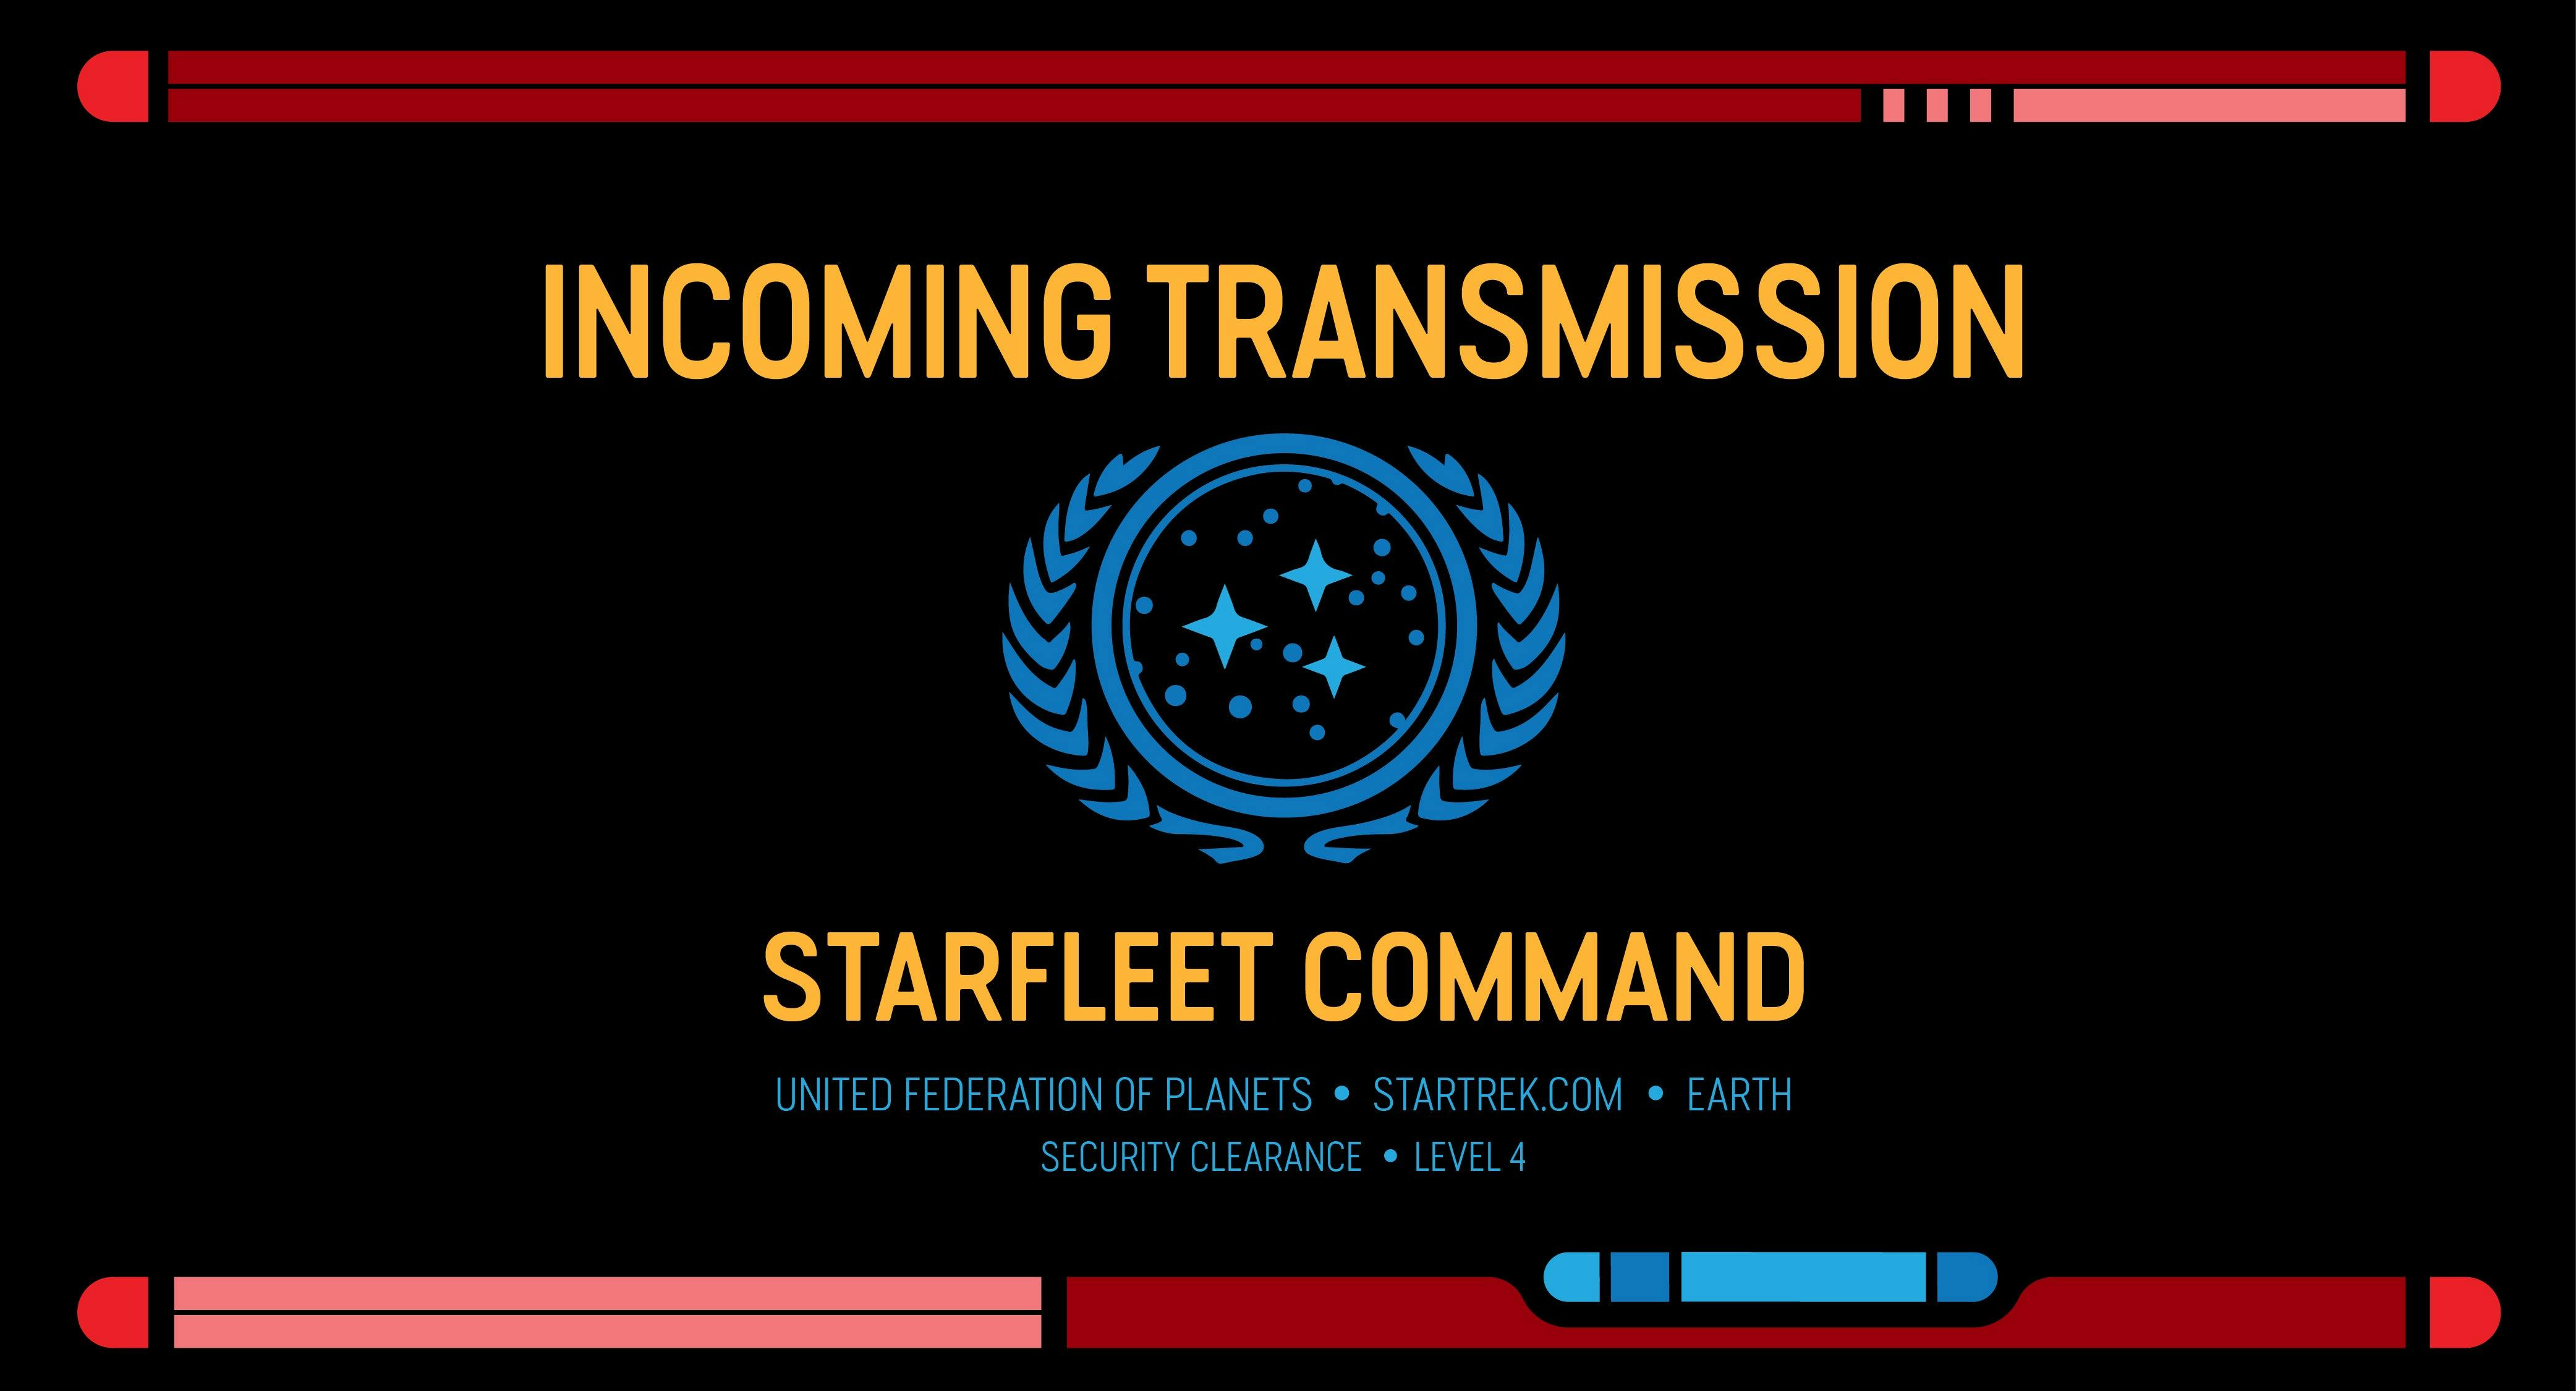 Breaking News Incoming Transmission alert from Starfleet Command